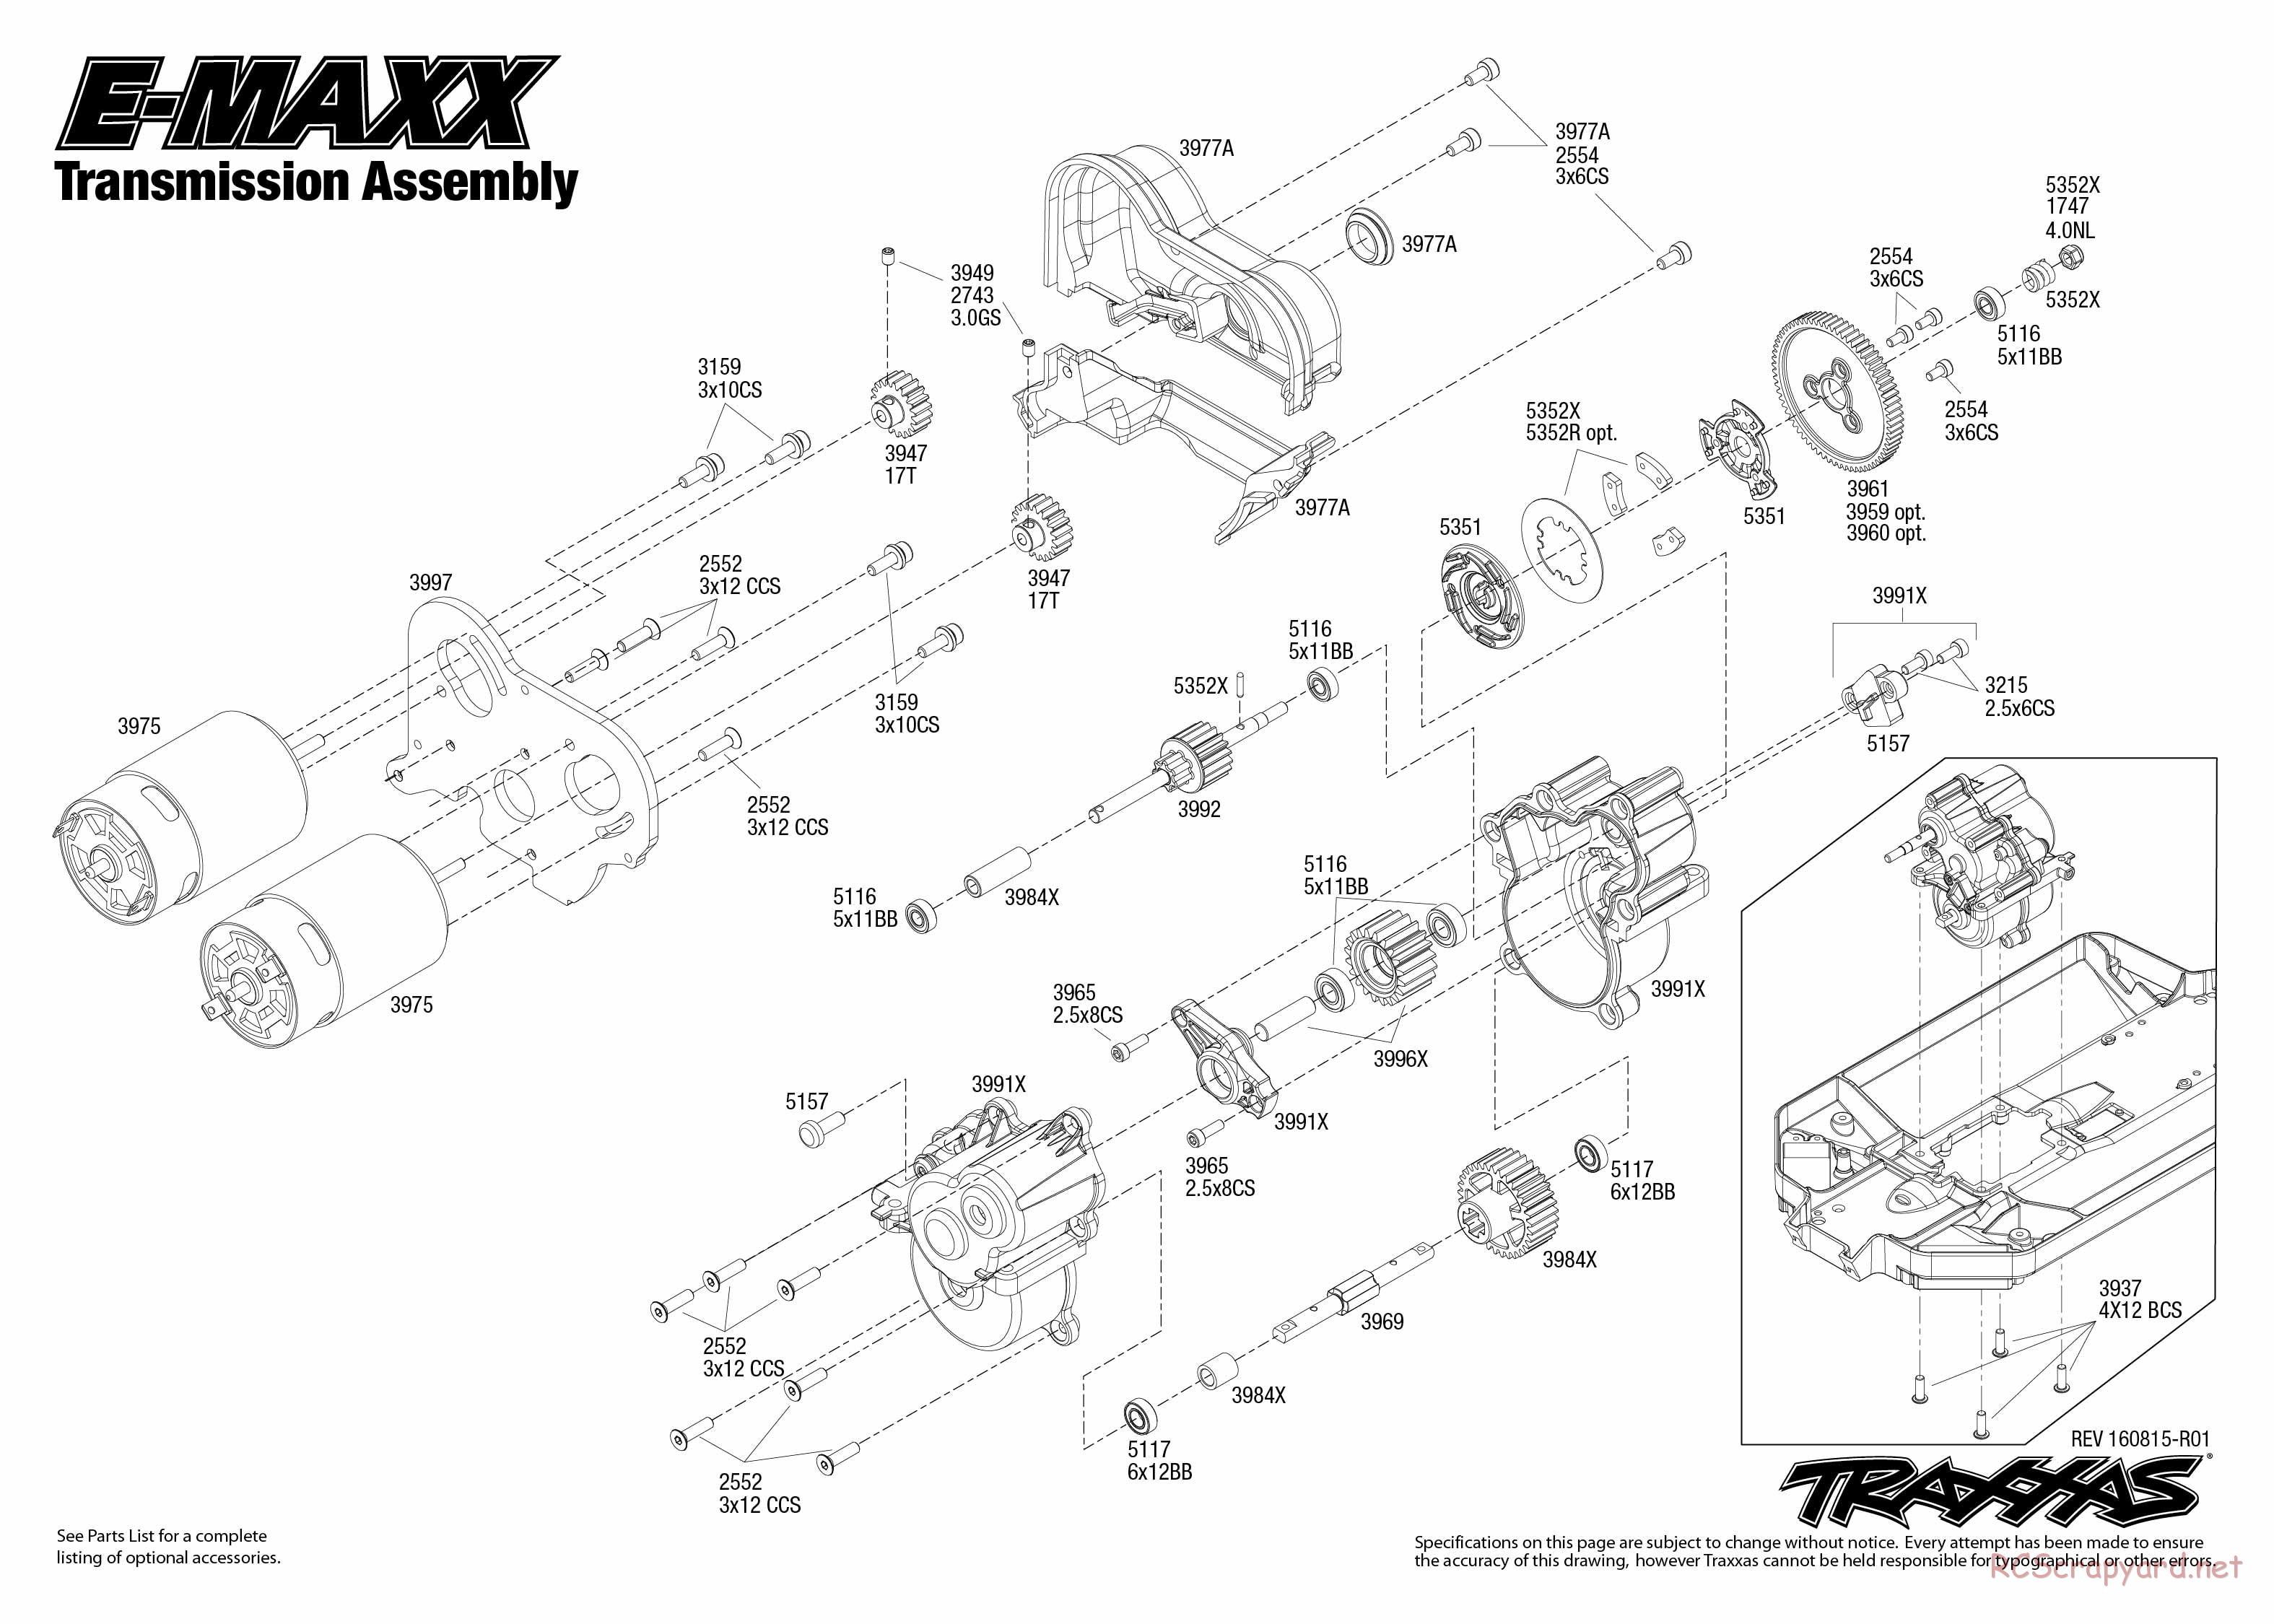 Traxxas - E-Maxx (2007) - Exploded Views - Page 4